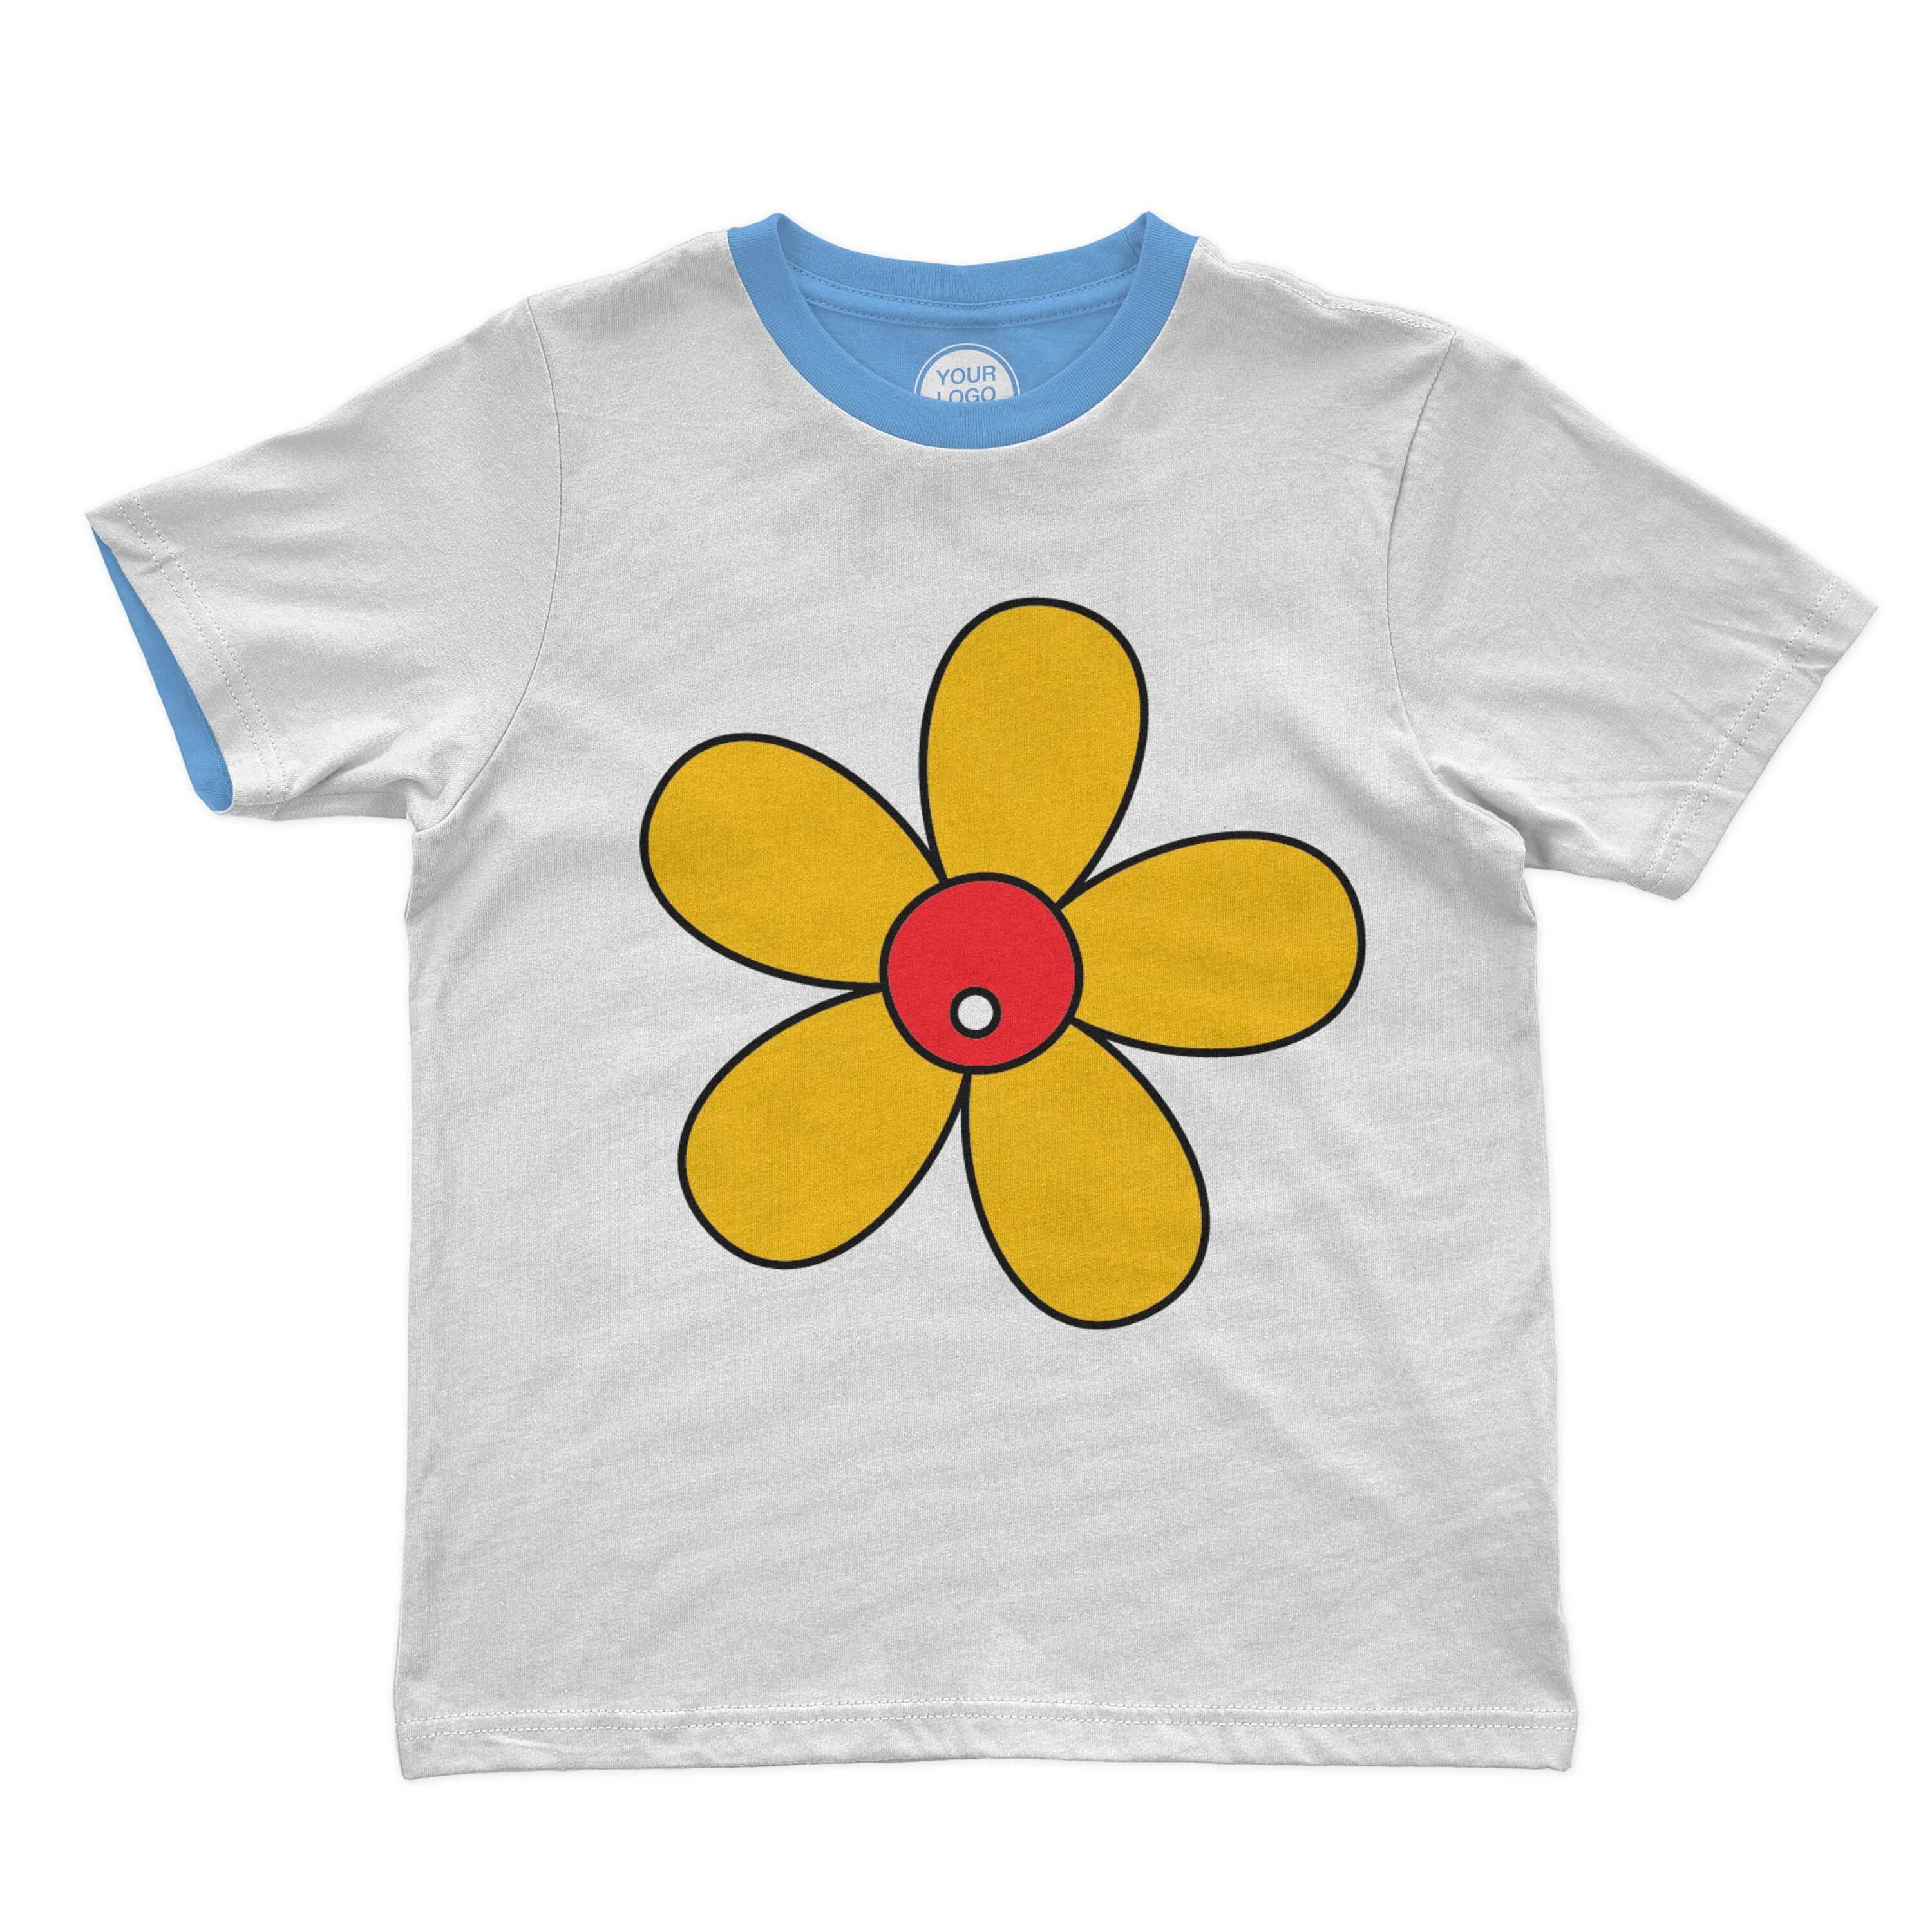 Hippie t-shirt with yellow flower design.